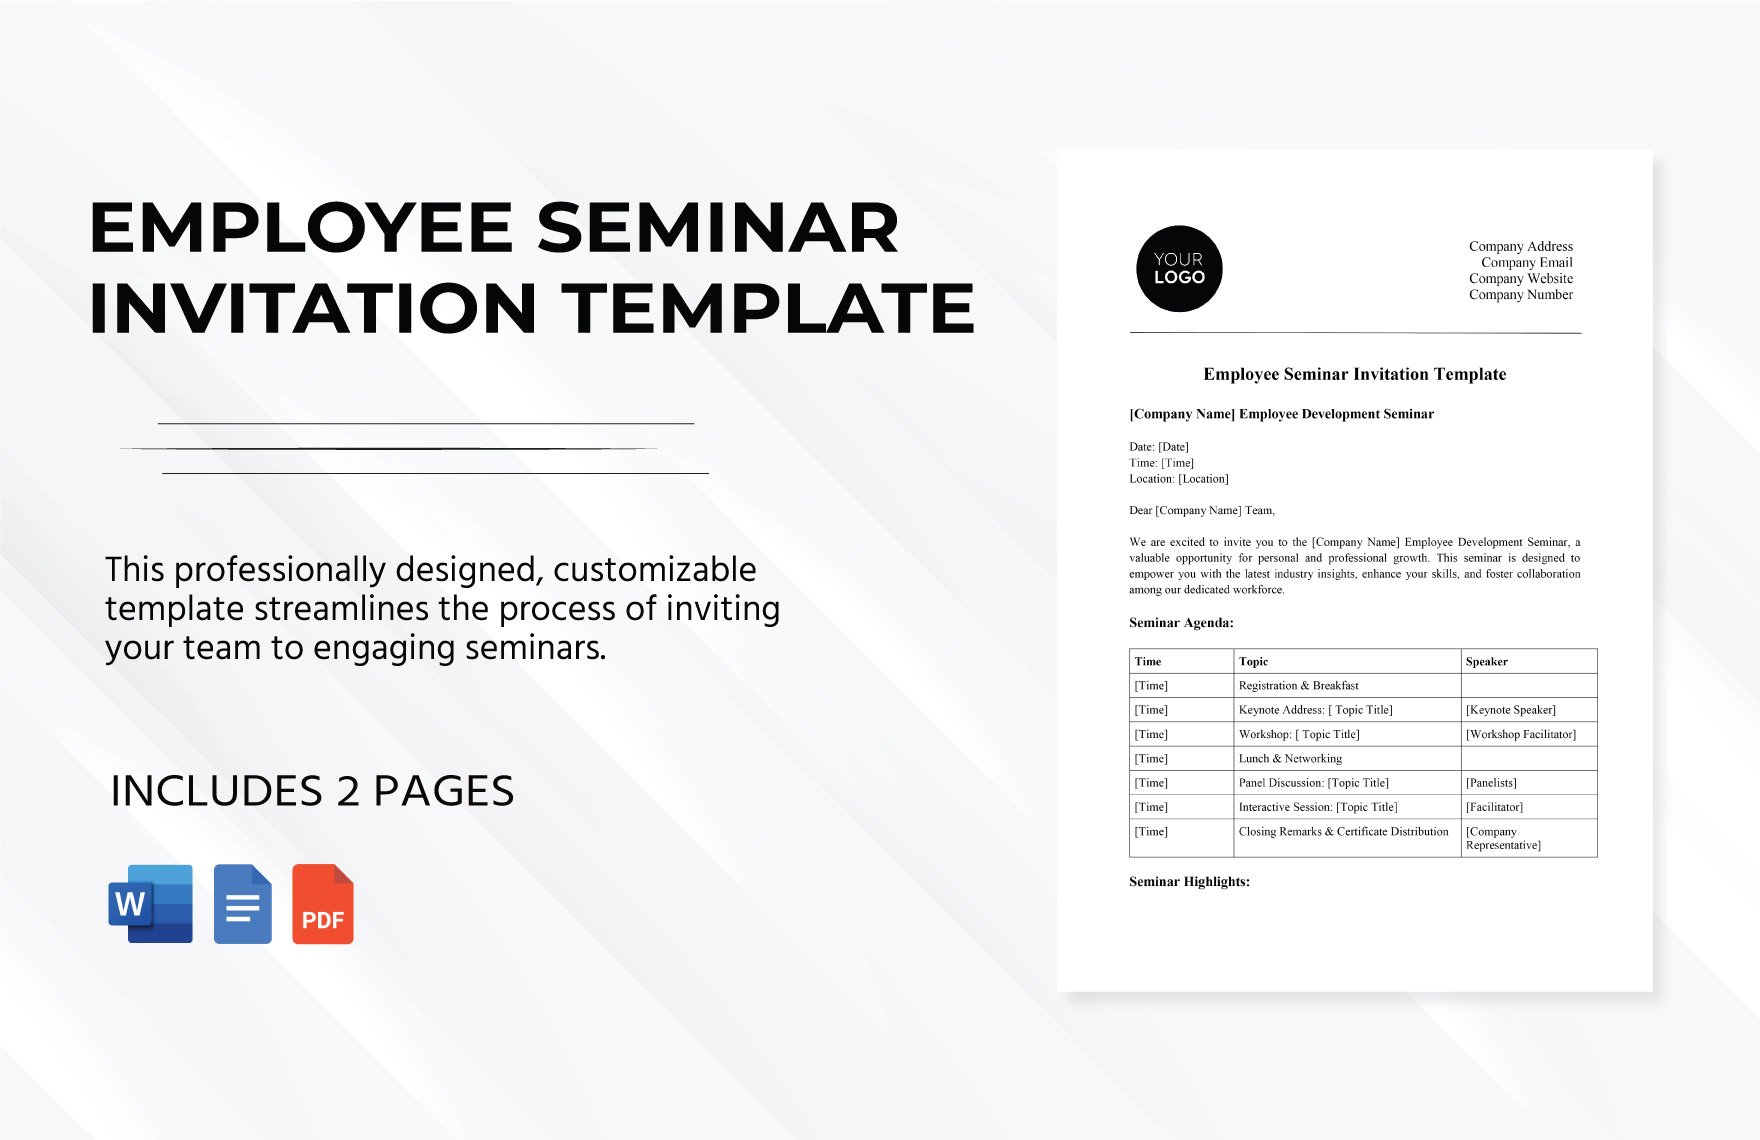 Employee Seminar Invitation HR Template in Word, Google Docs, PDF